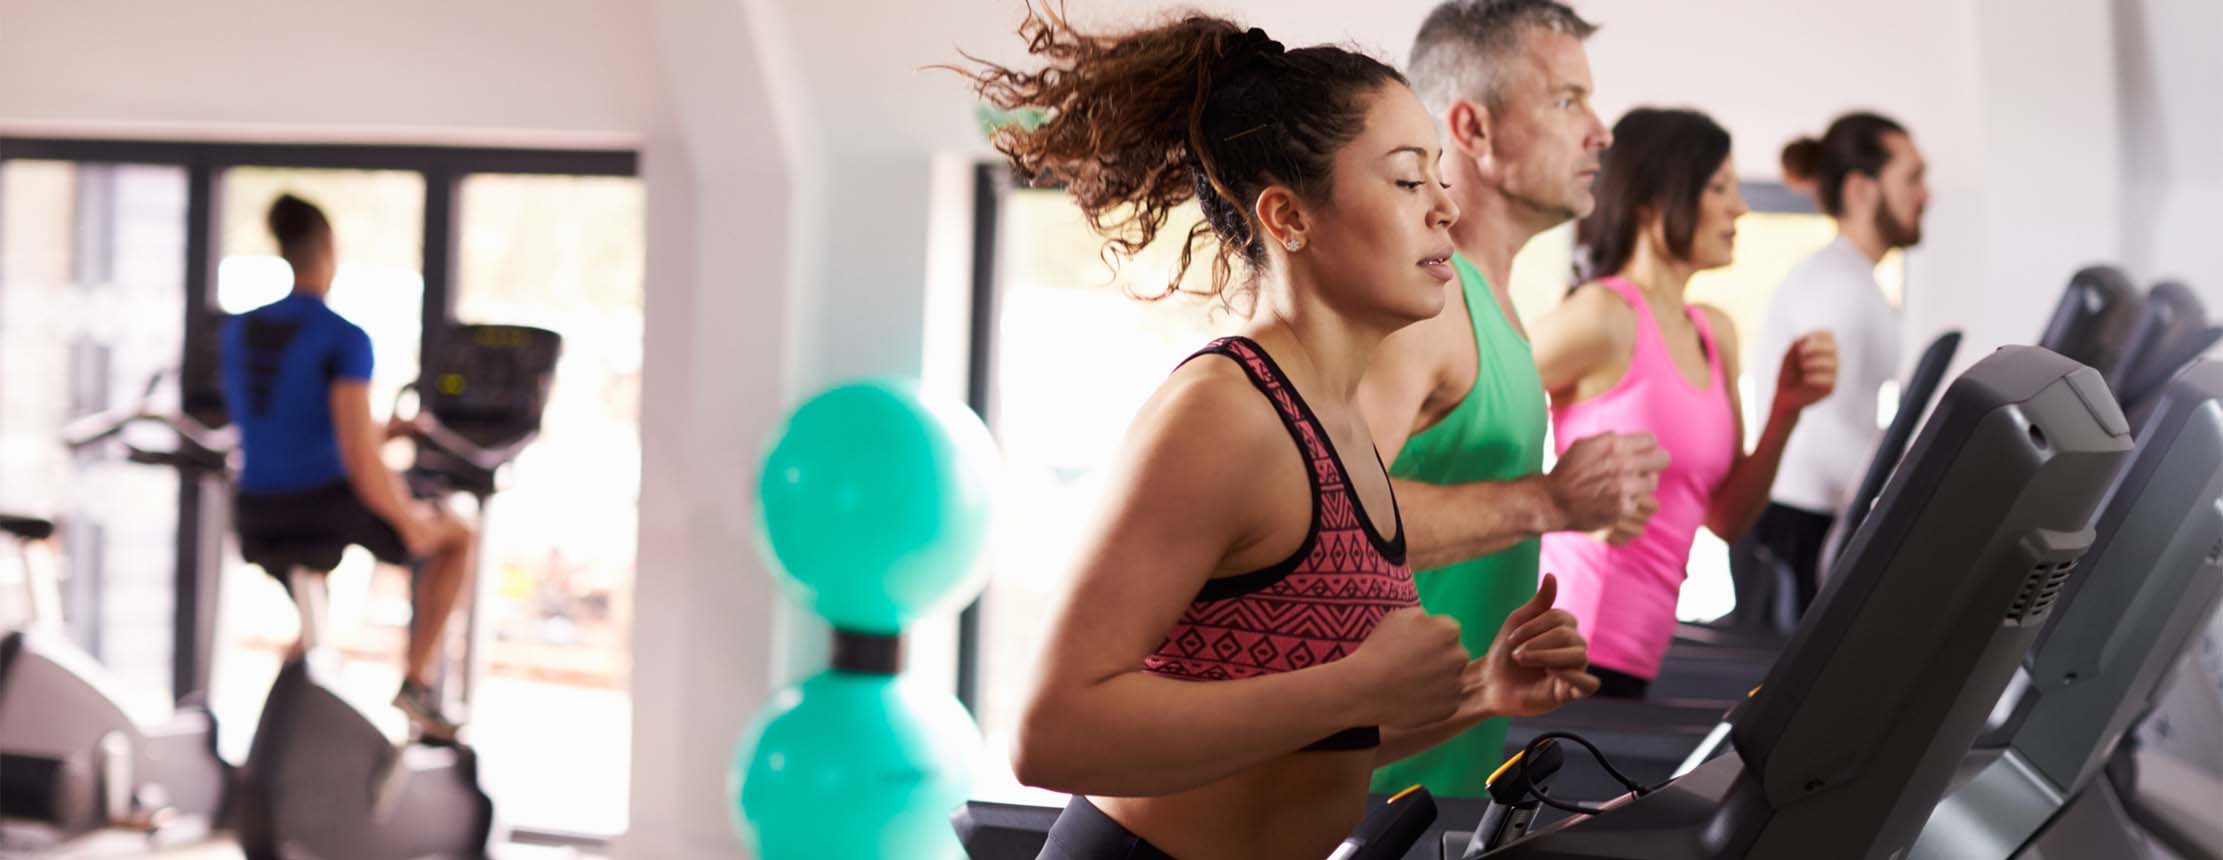 Gym goers on treadmill